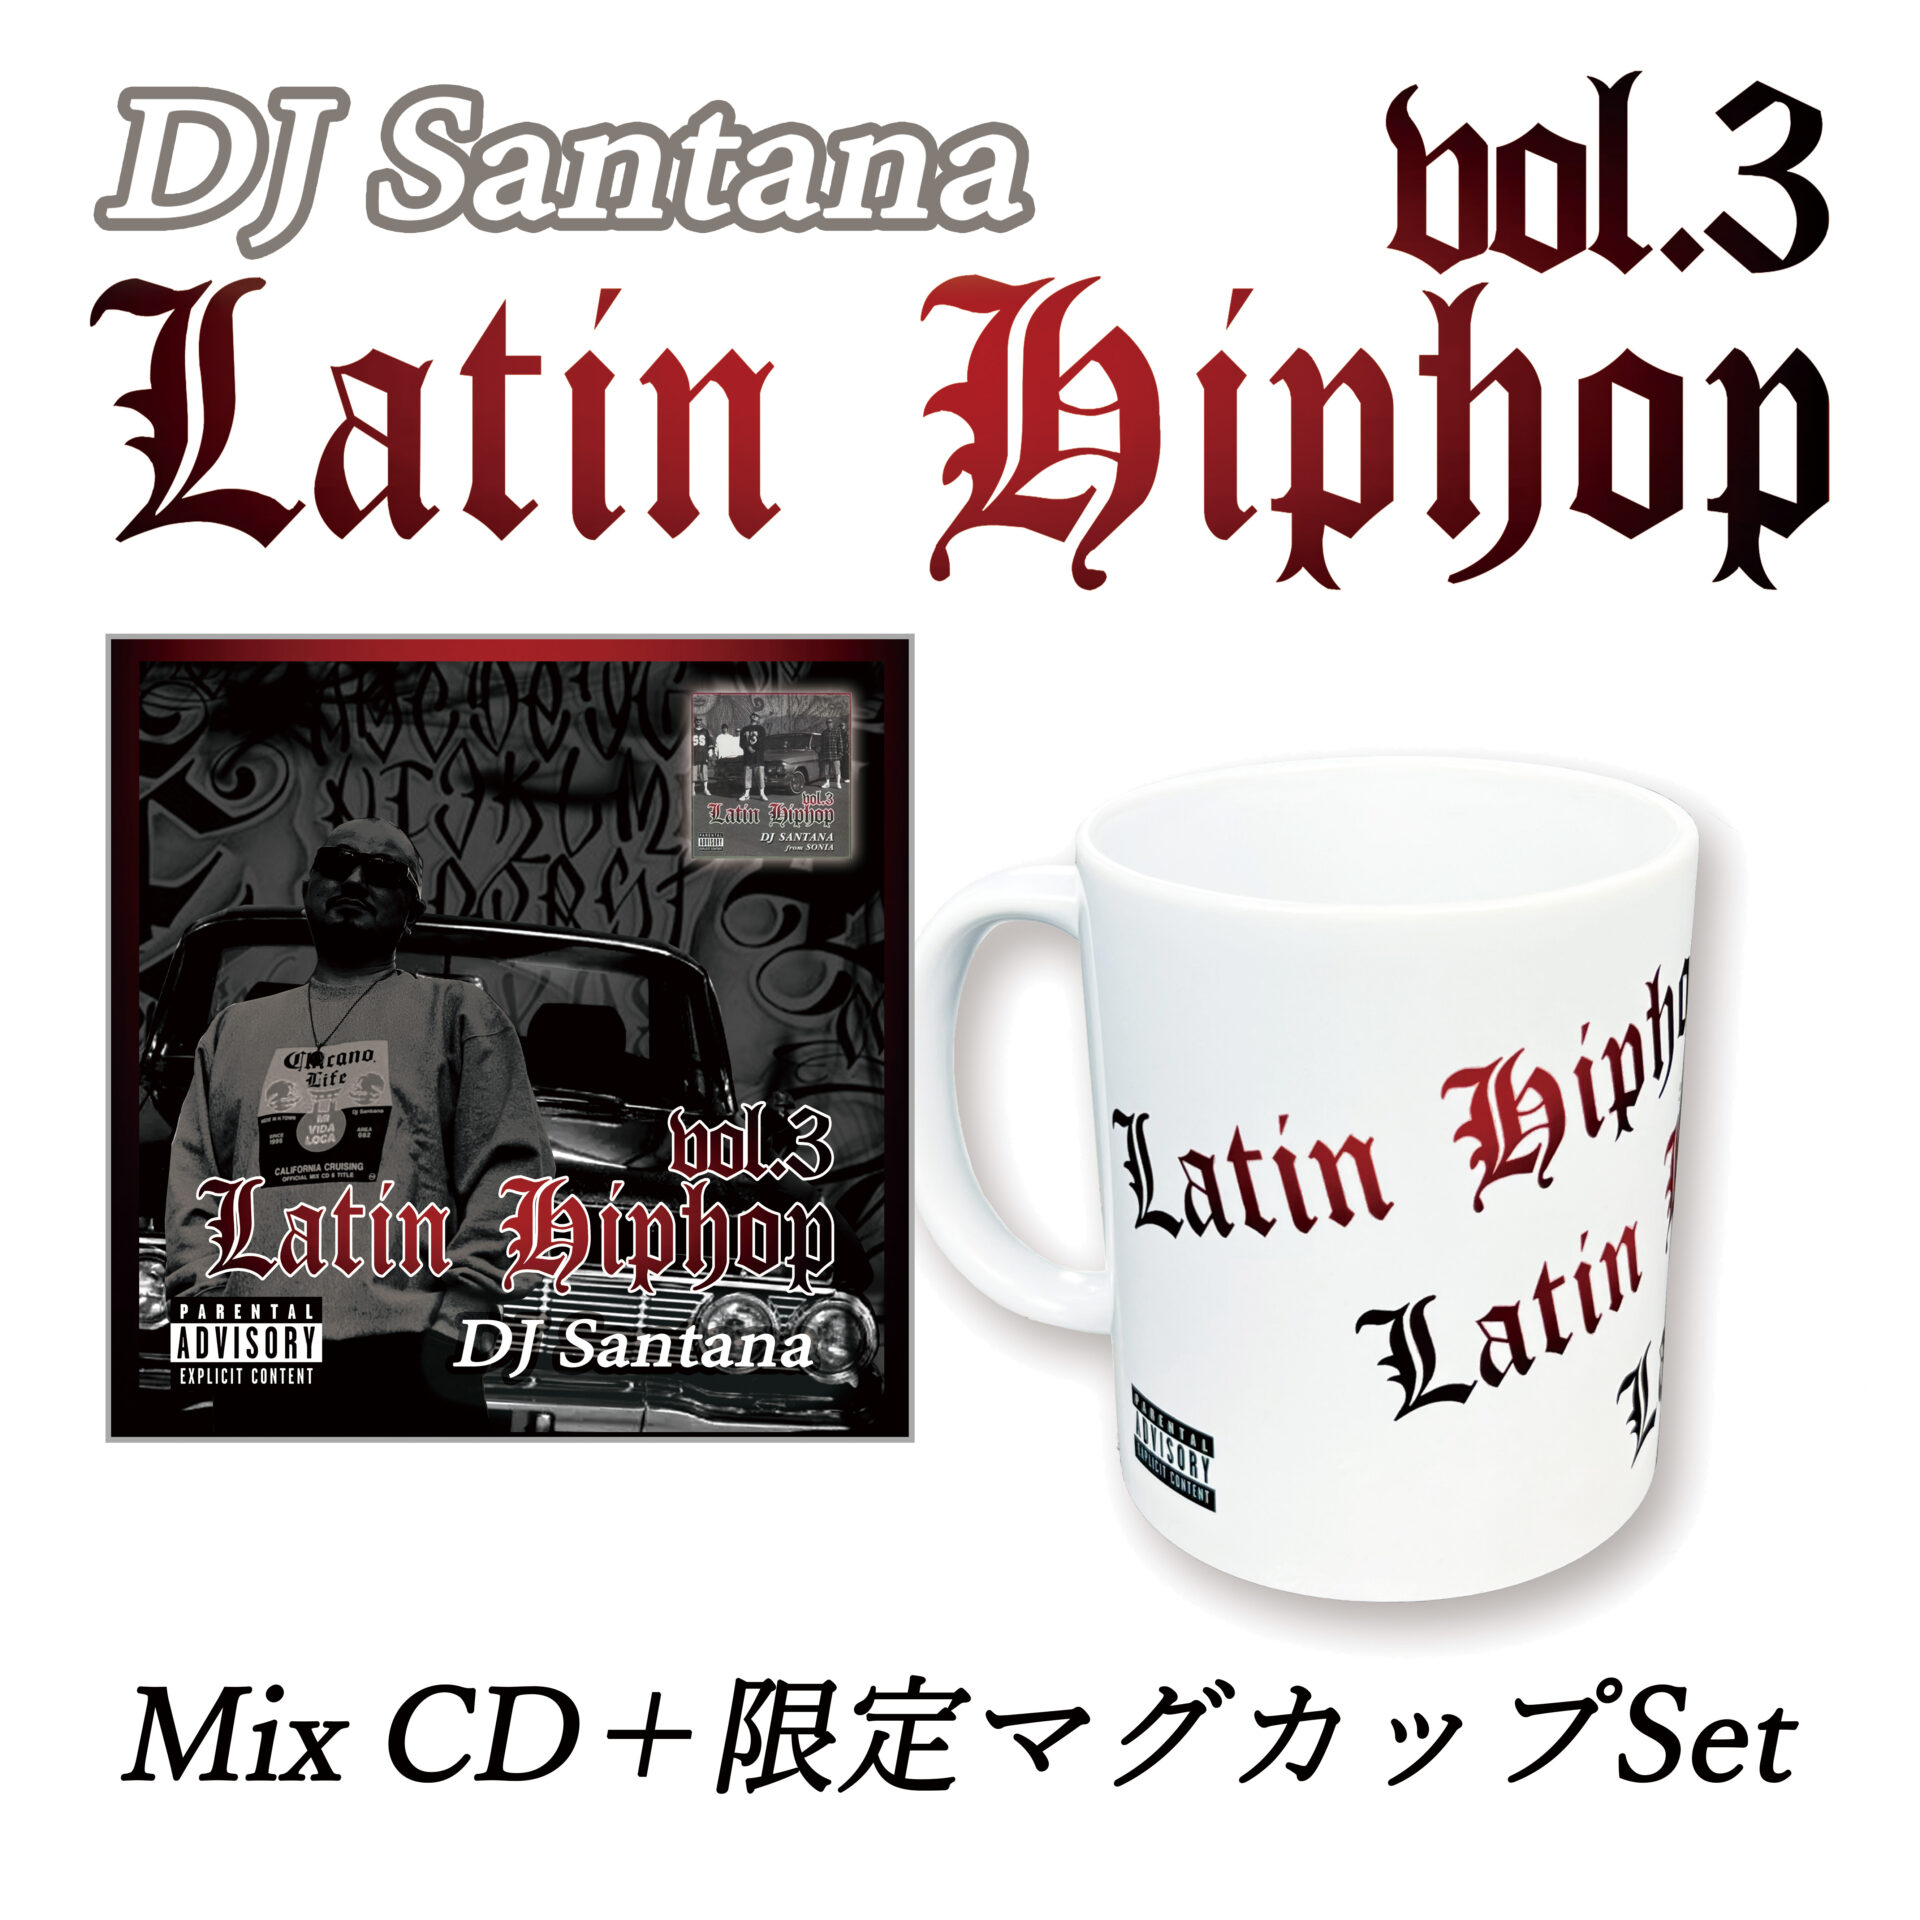 DJ SANTANA MIX CD セット チカーノ ラテン